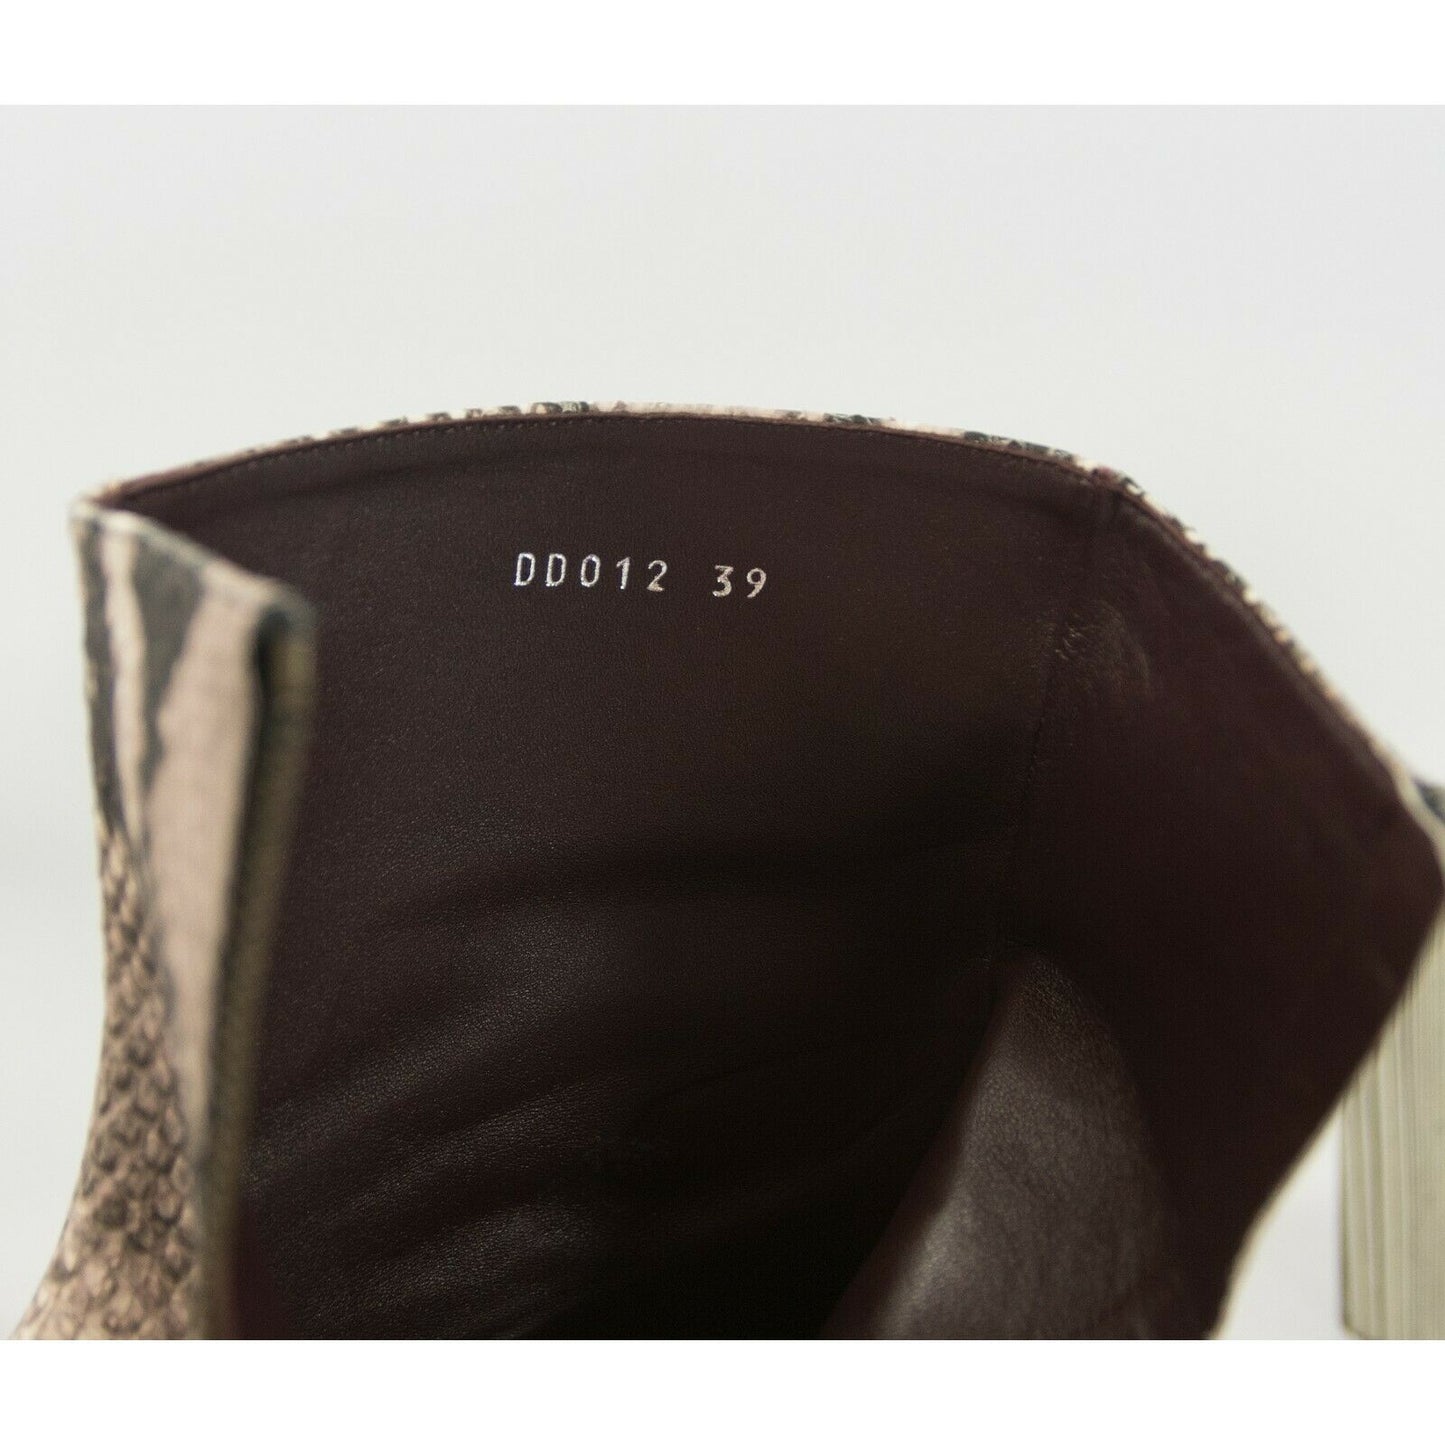 Dries Van Noten Snake Embossed Leather Zip Ankle Booties Boots Size 39